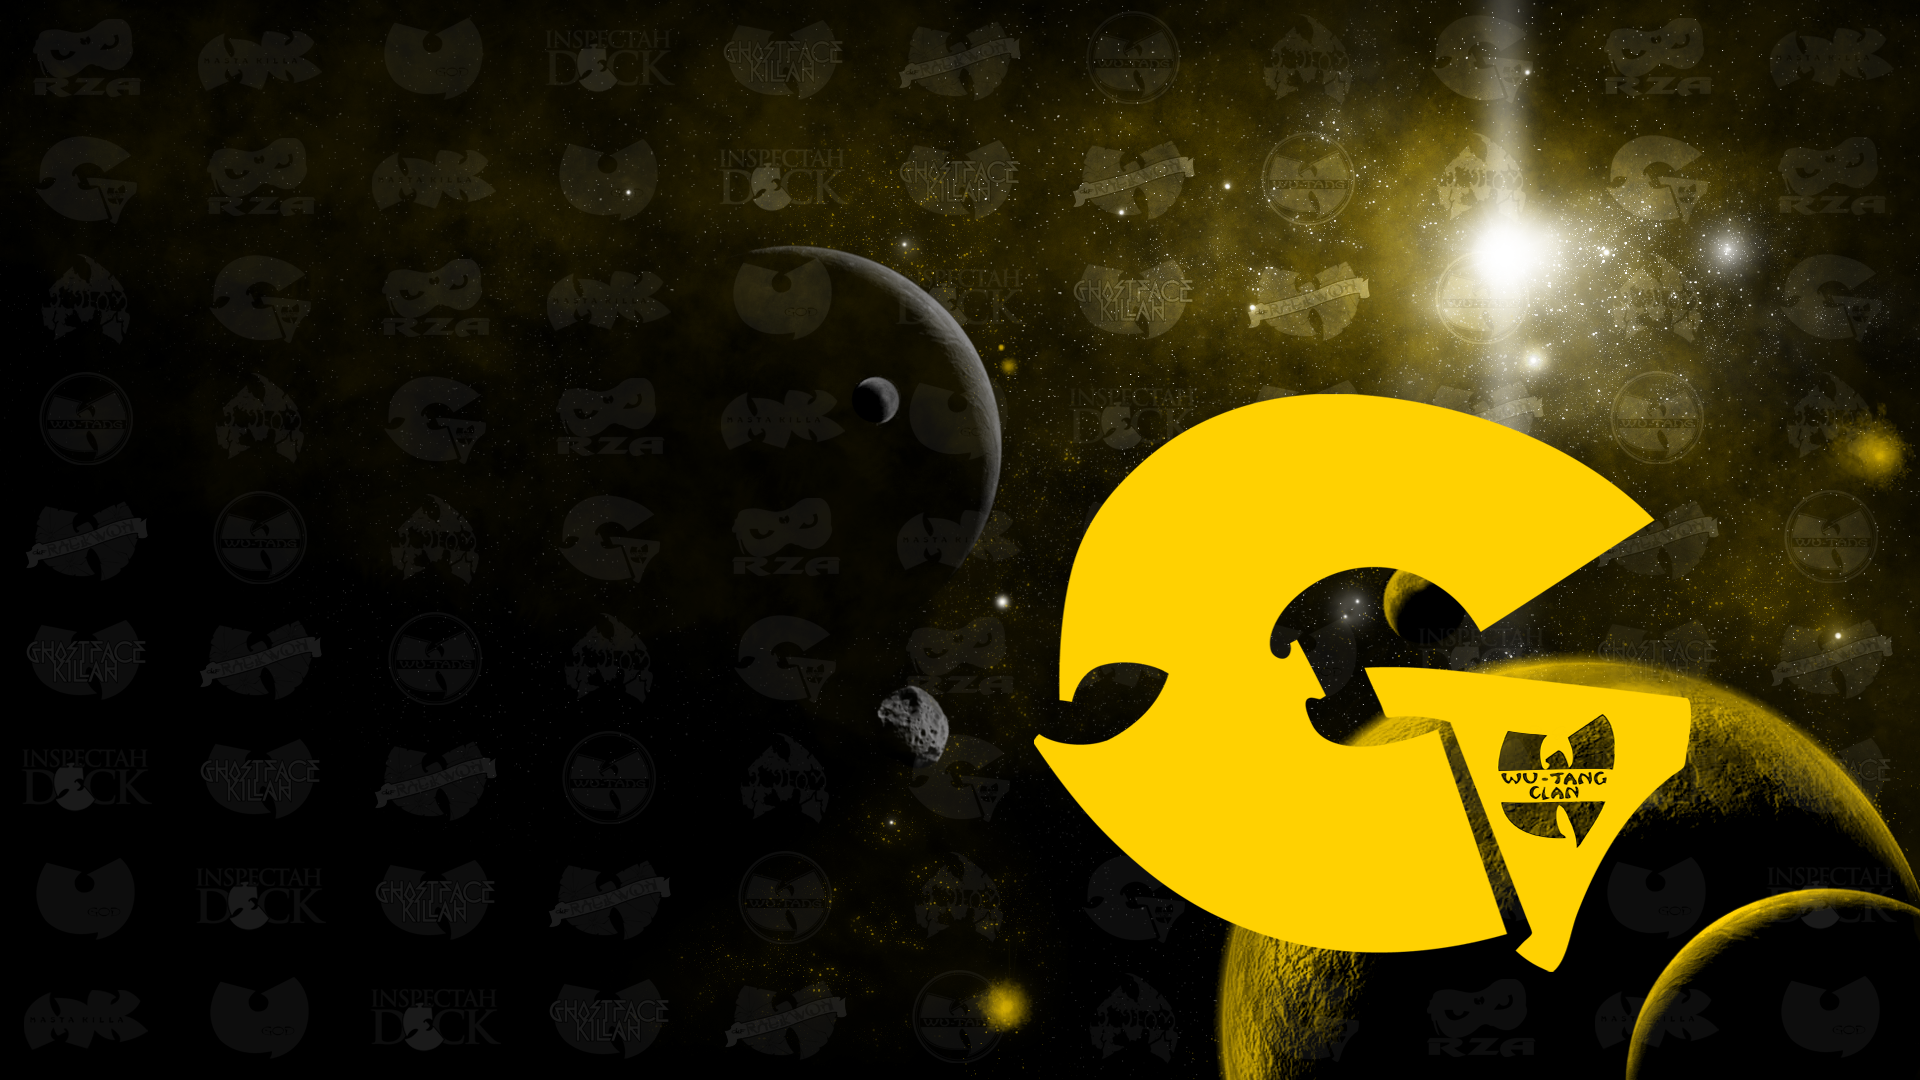 Wu-Tang Clan Logos: GZA/Genius by uLtRaMa6nEt1cART on DeviantArt